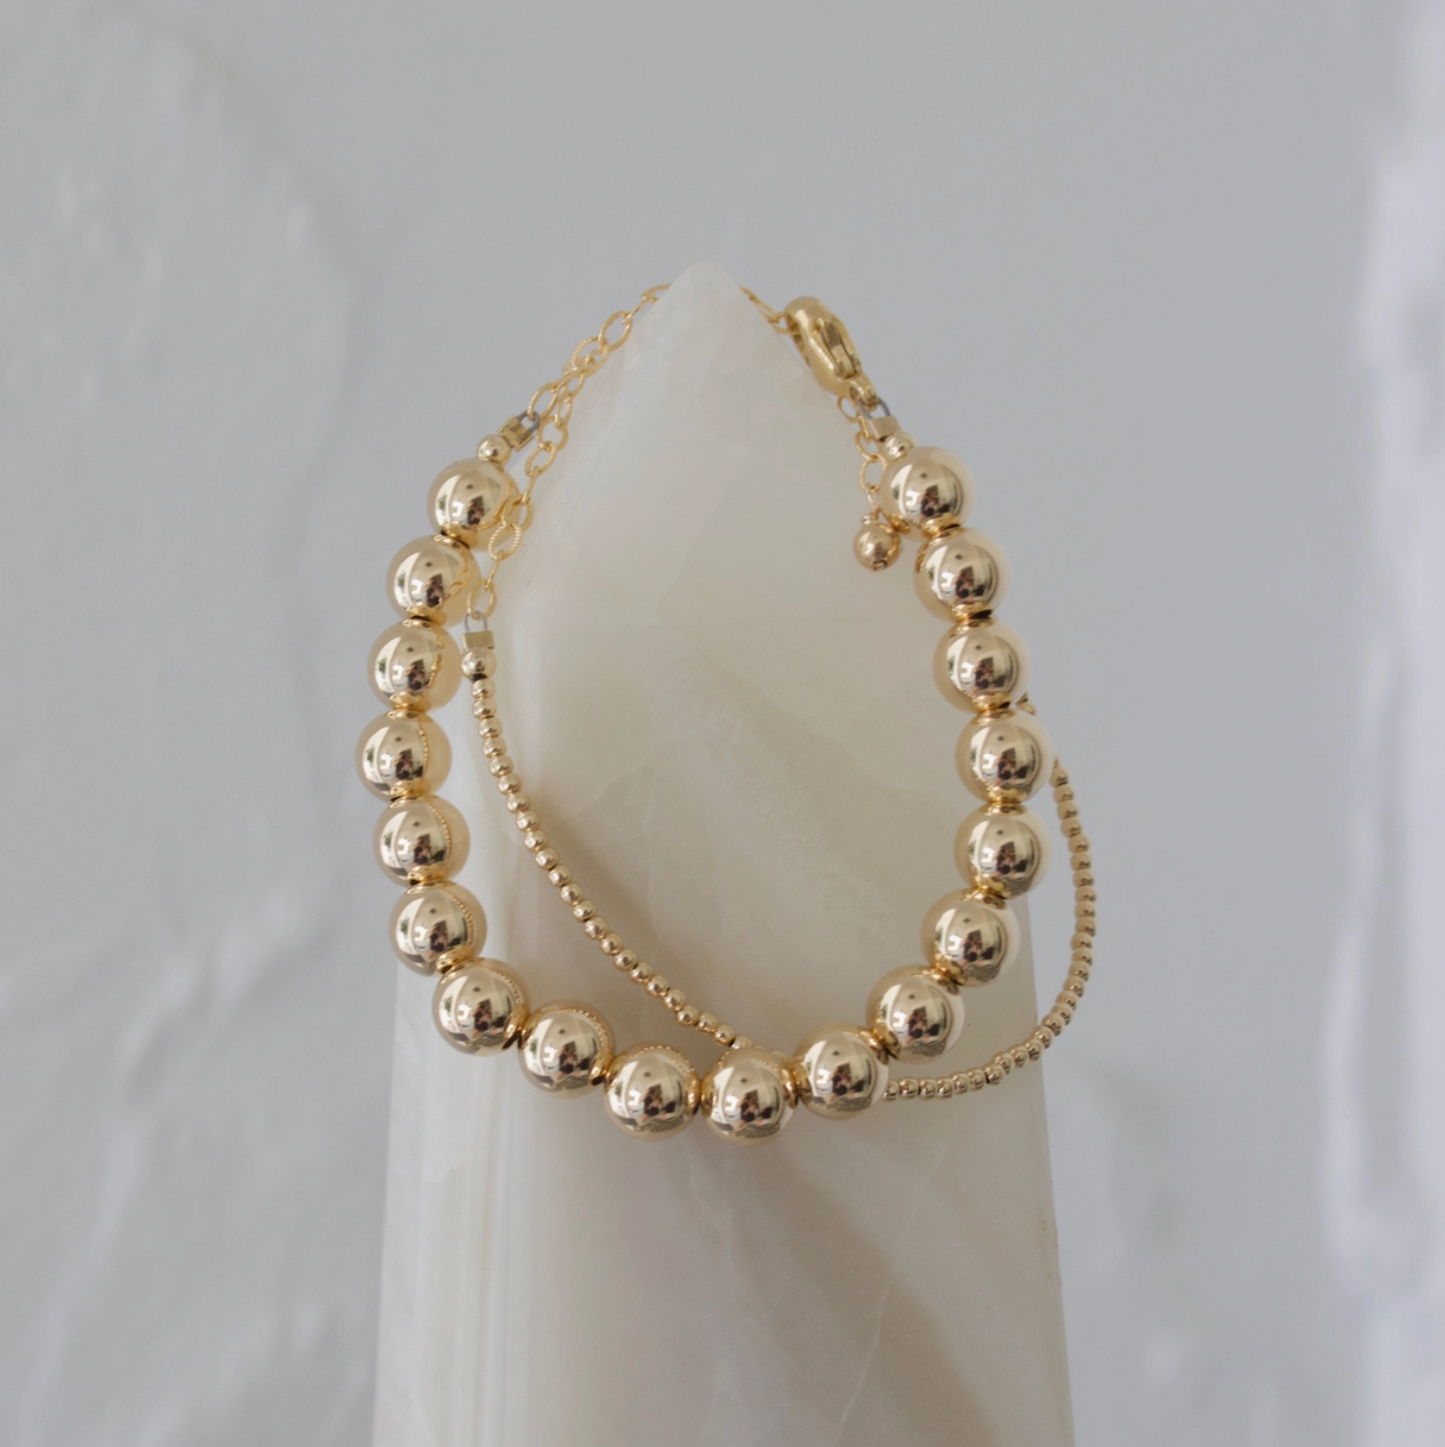 Chunky Gold Filled Round Bead Bracelet - Katie Waltman